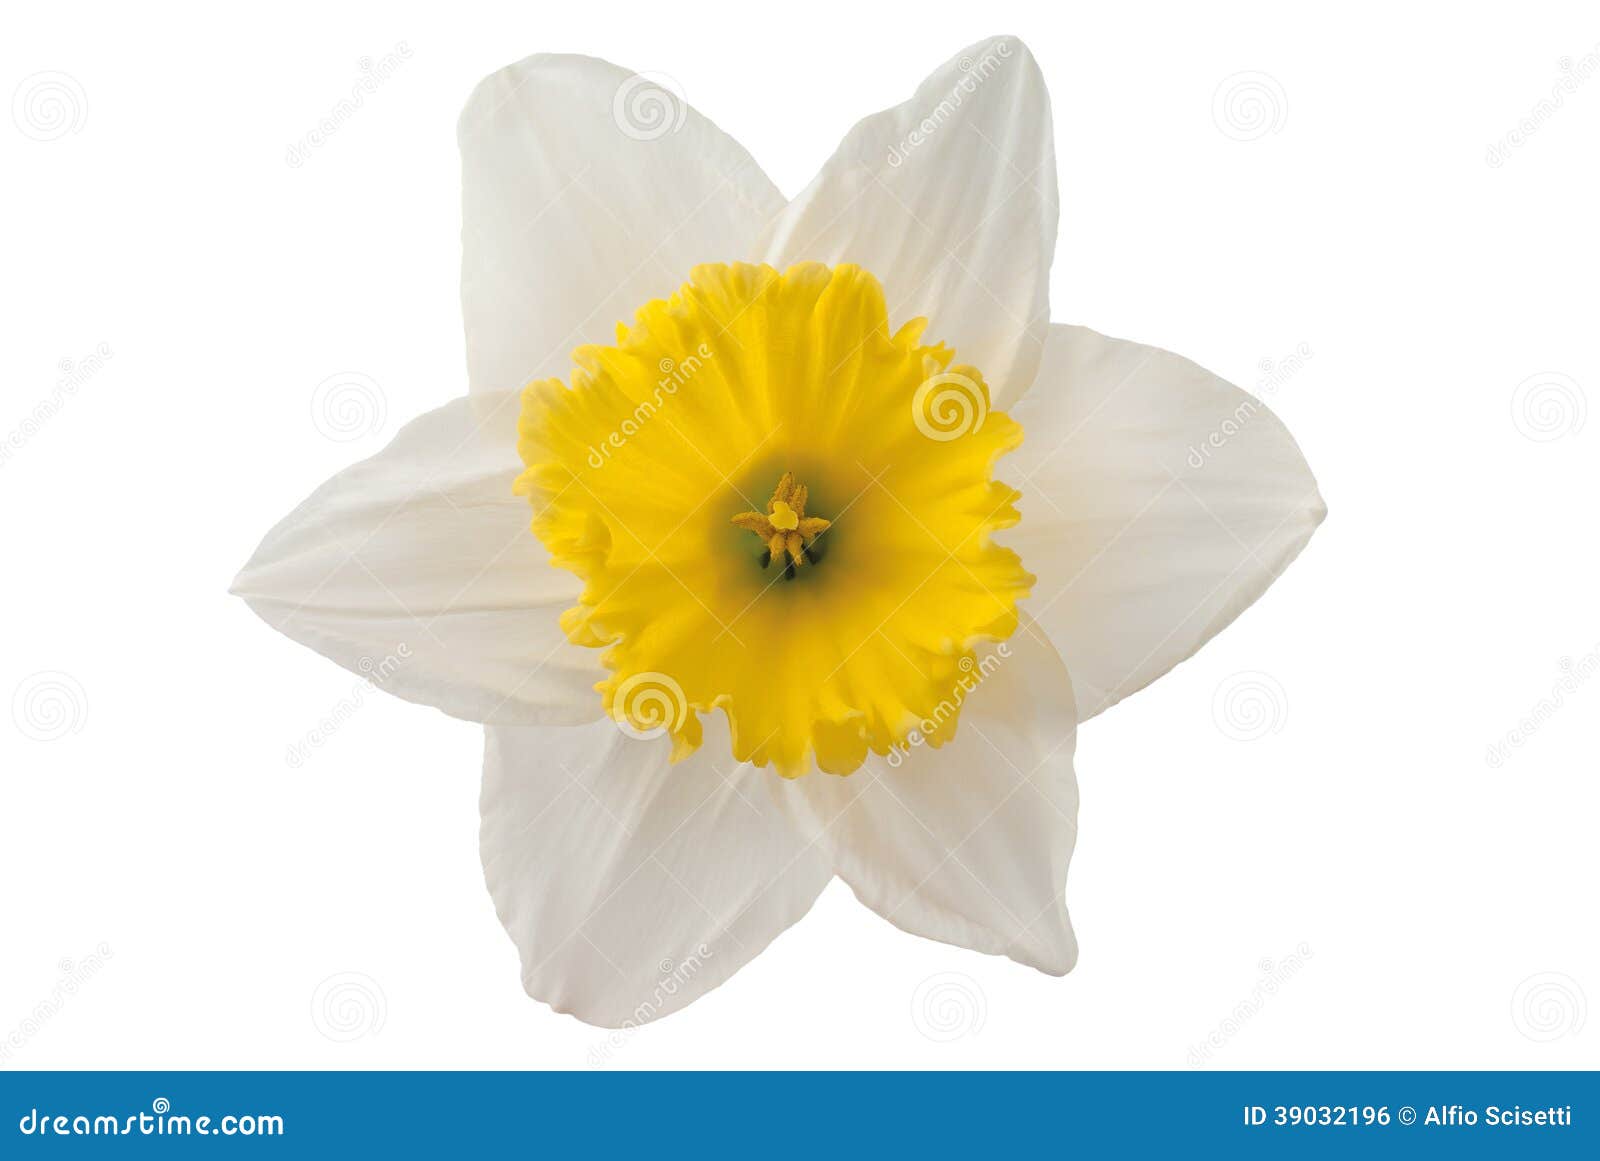 White daffodil stock photo. Image of closeup, daffodil - 39032196